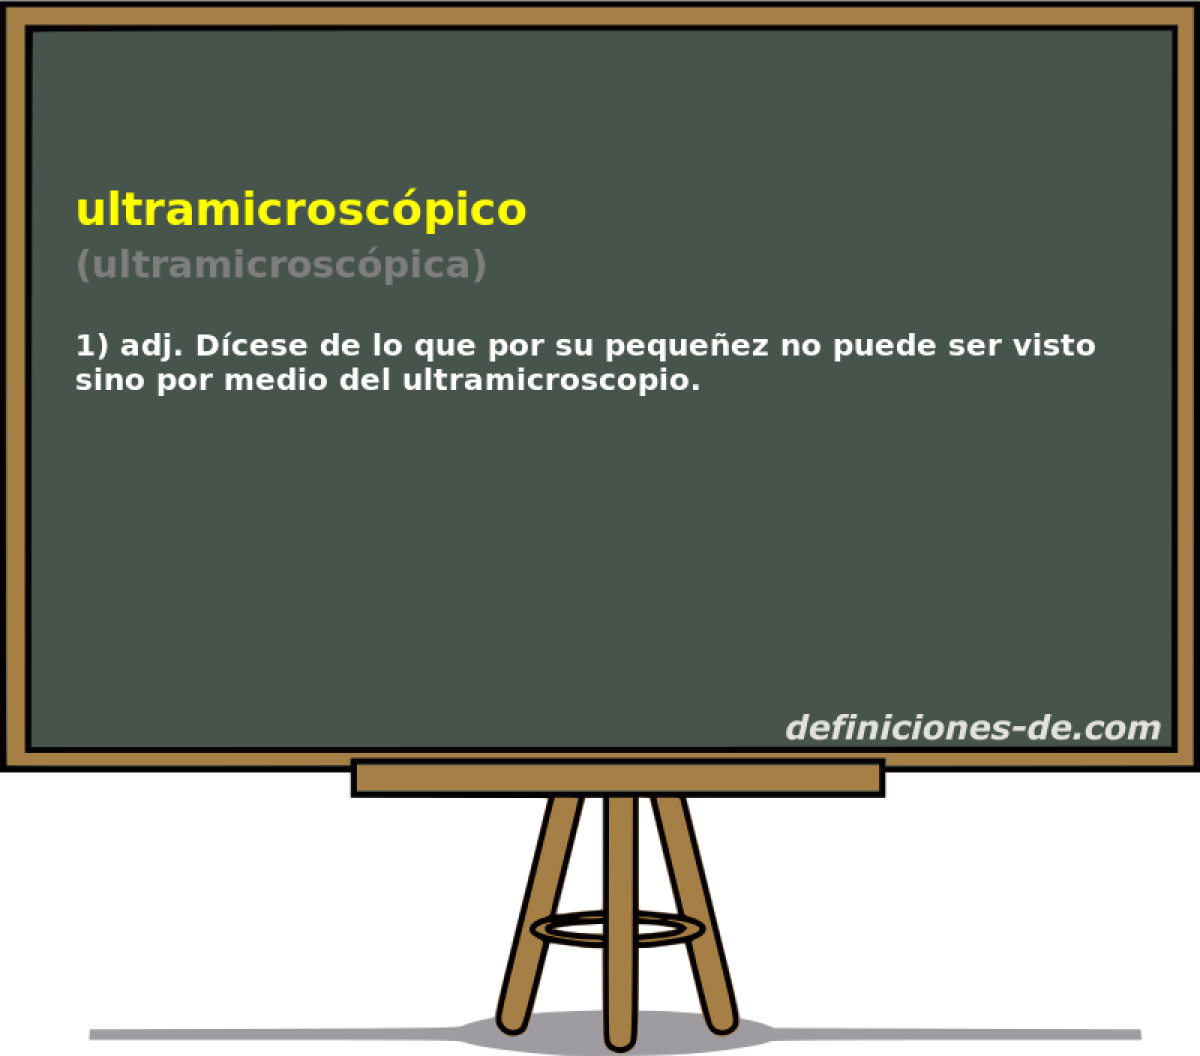 ultramicroscpico (ultramicroscpica)